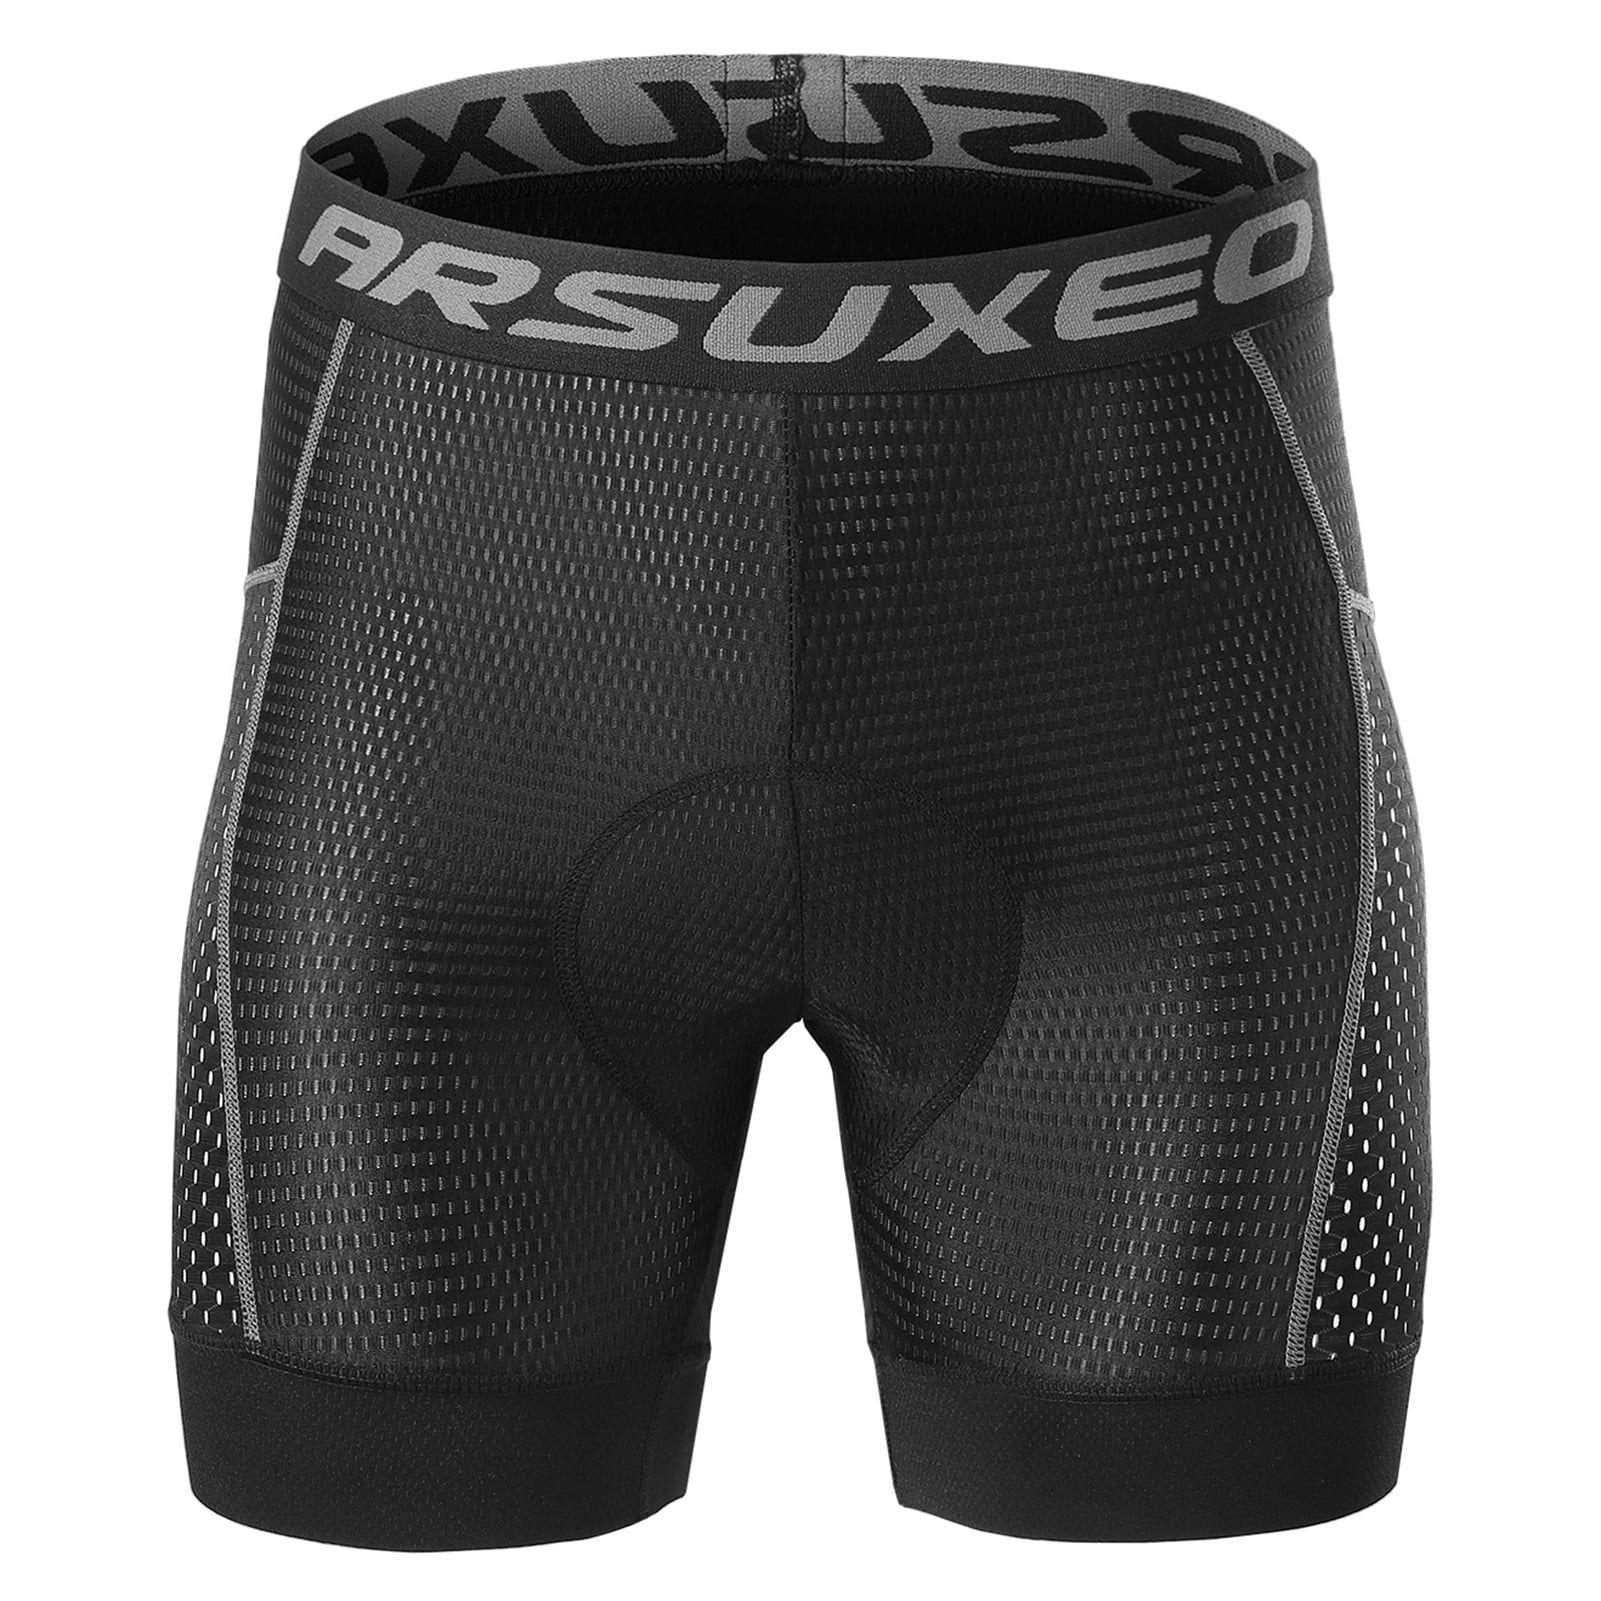 Men 5D Gel Padded Cycling Shorts Bike Bicycle Riding Short Pants Underwear UK 